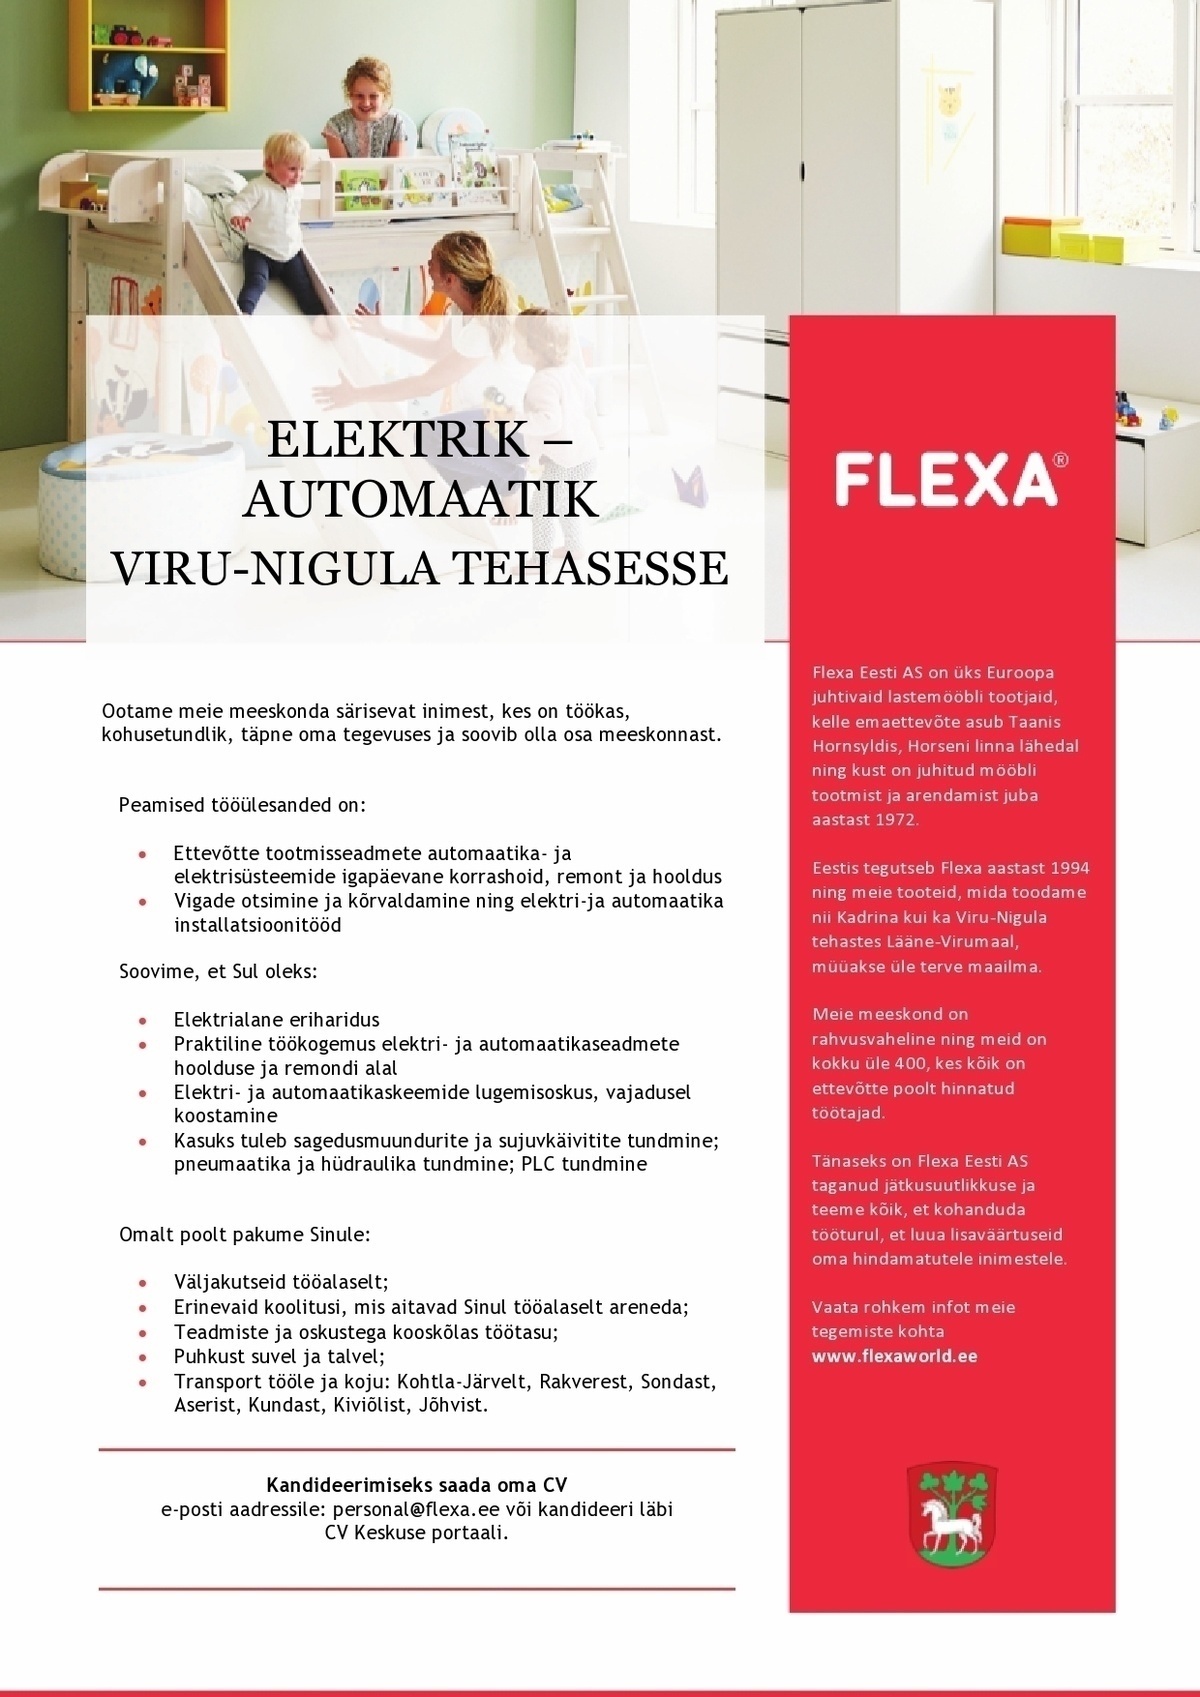 Flexa Eesti AS ELEKTRIK - AUTOMAATIK